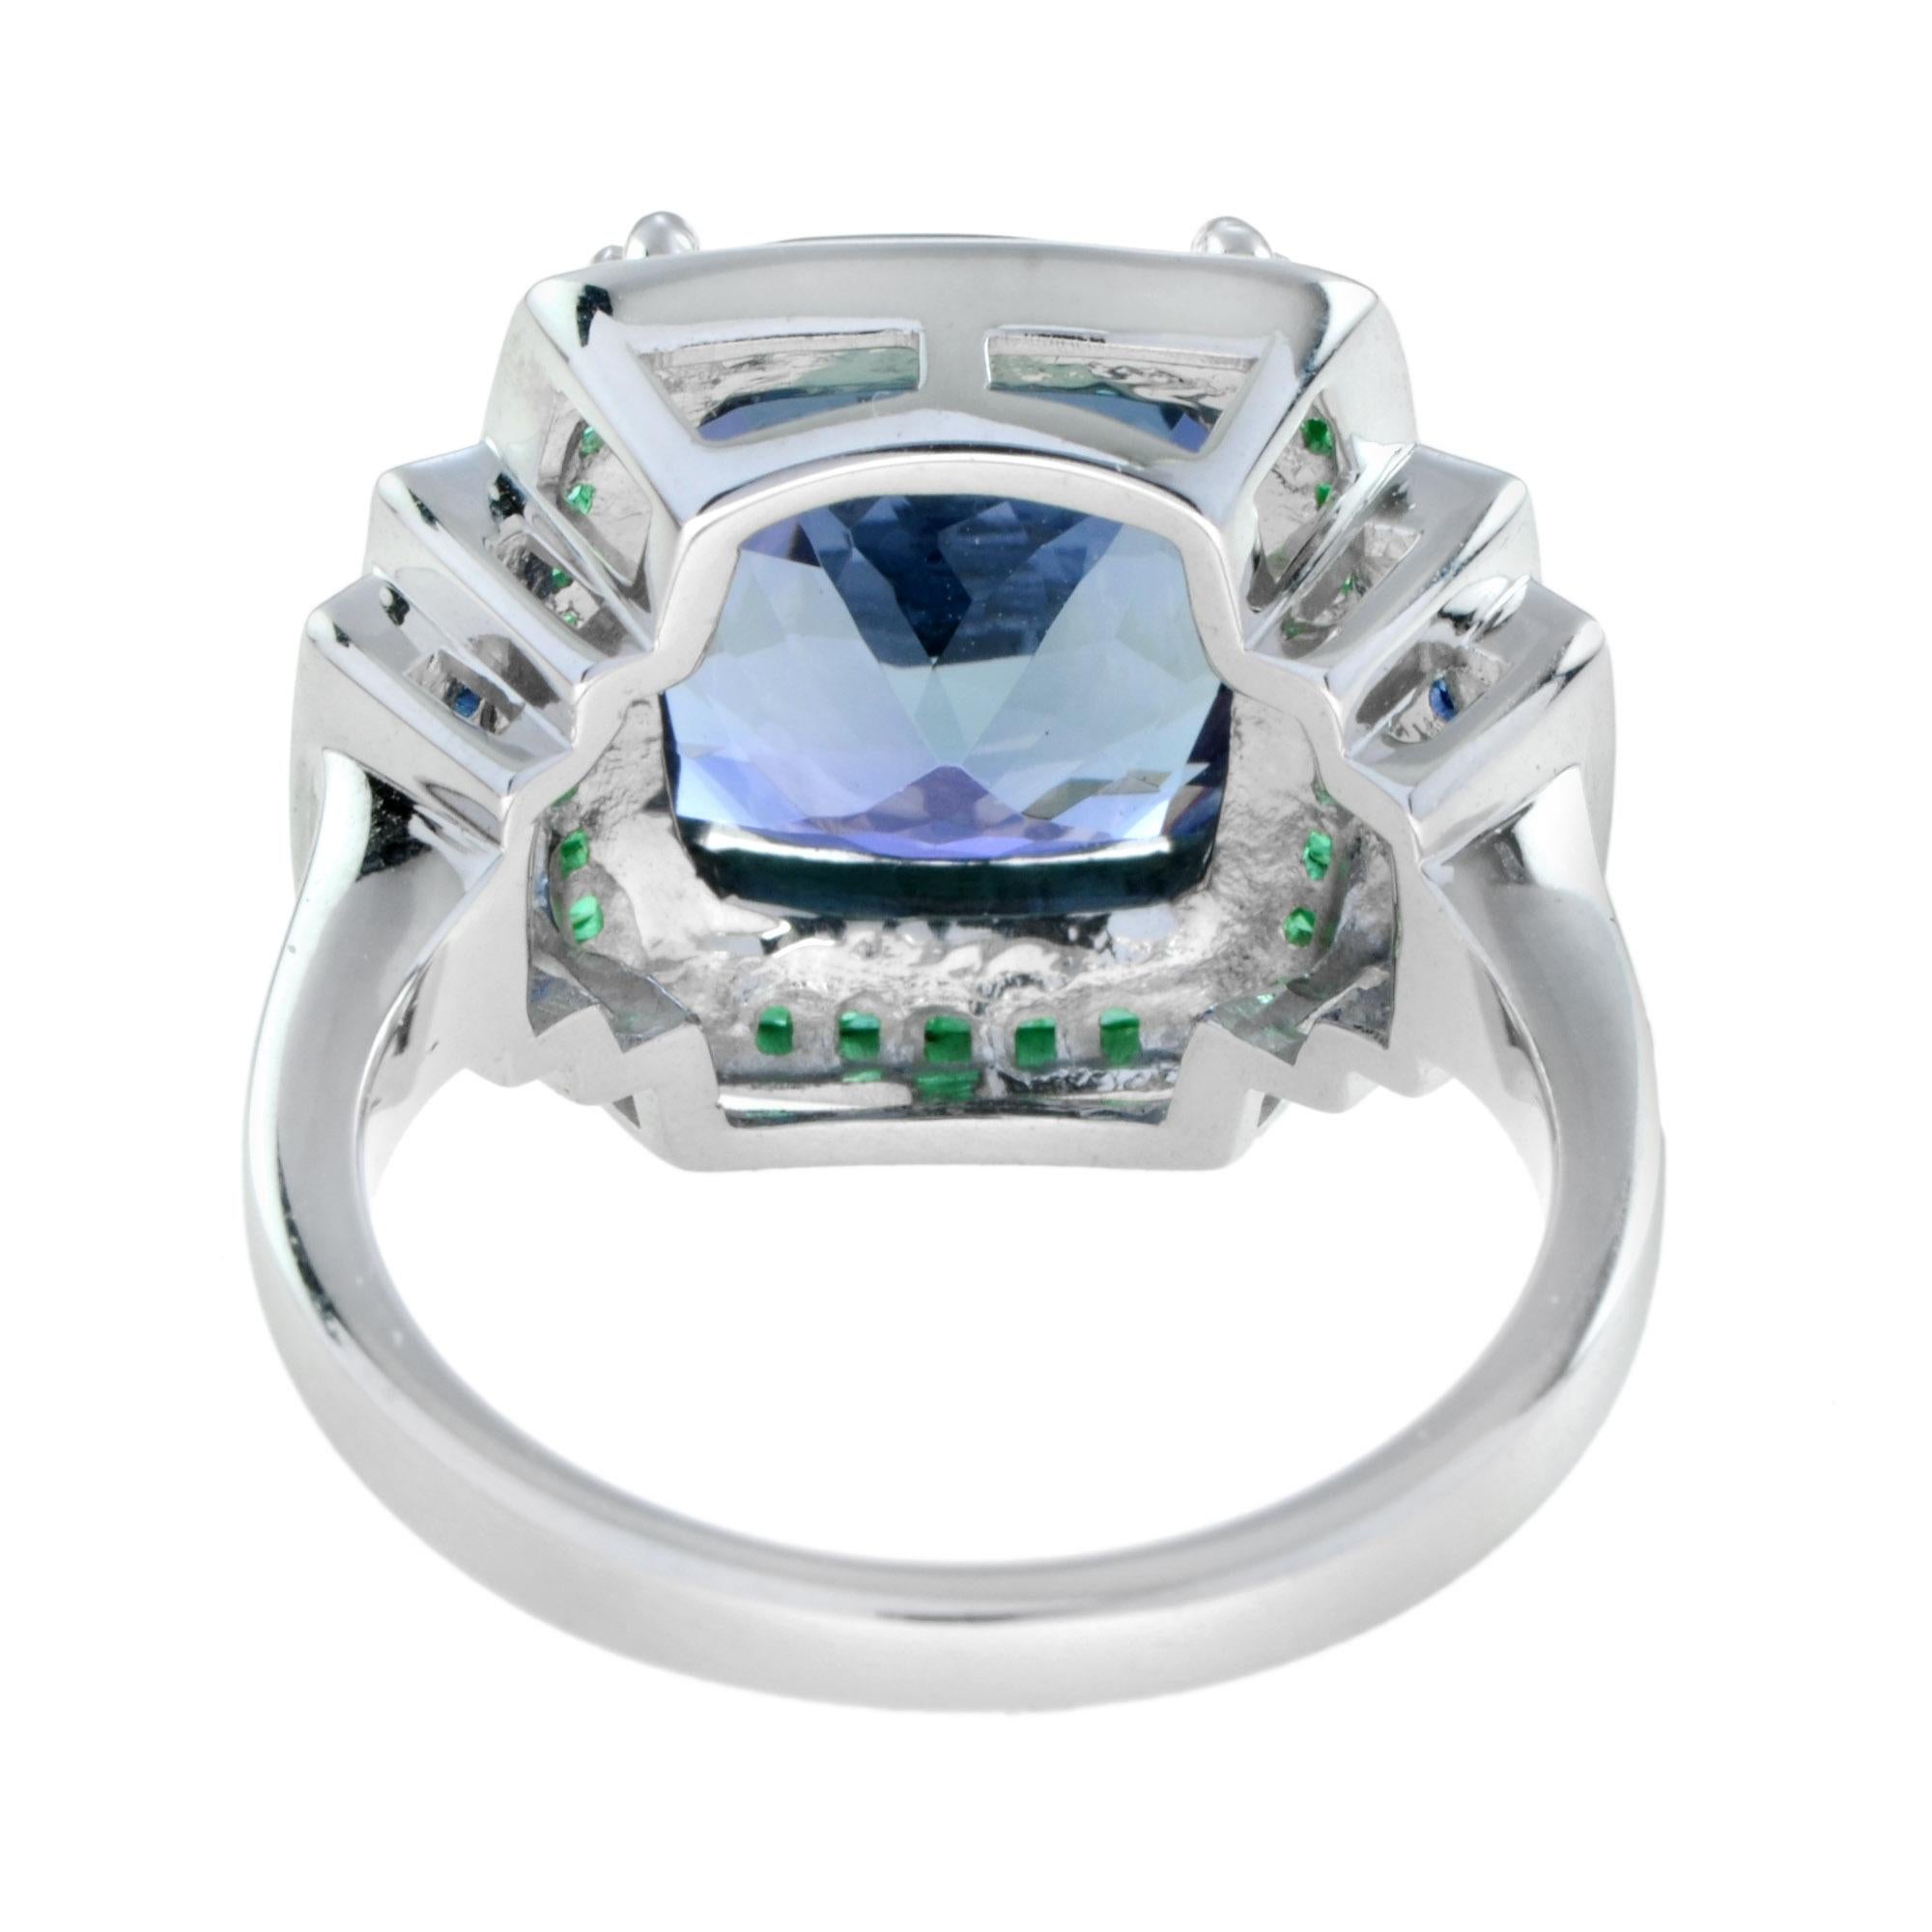 Cushion Cut Extraordinary 6.56 Carats Cushion Tanzanite with Emerald and Sapphire Halo Ring